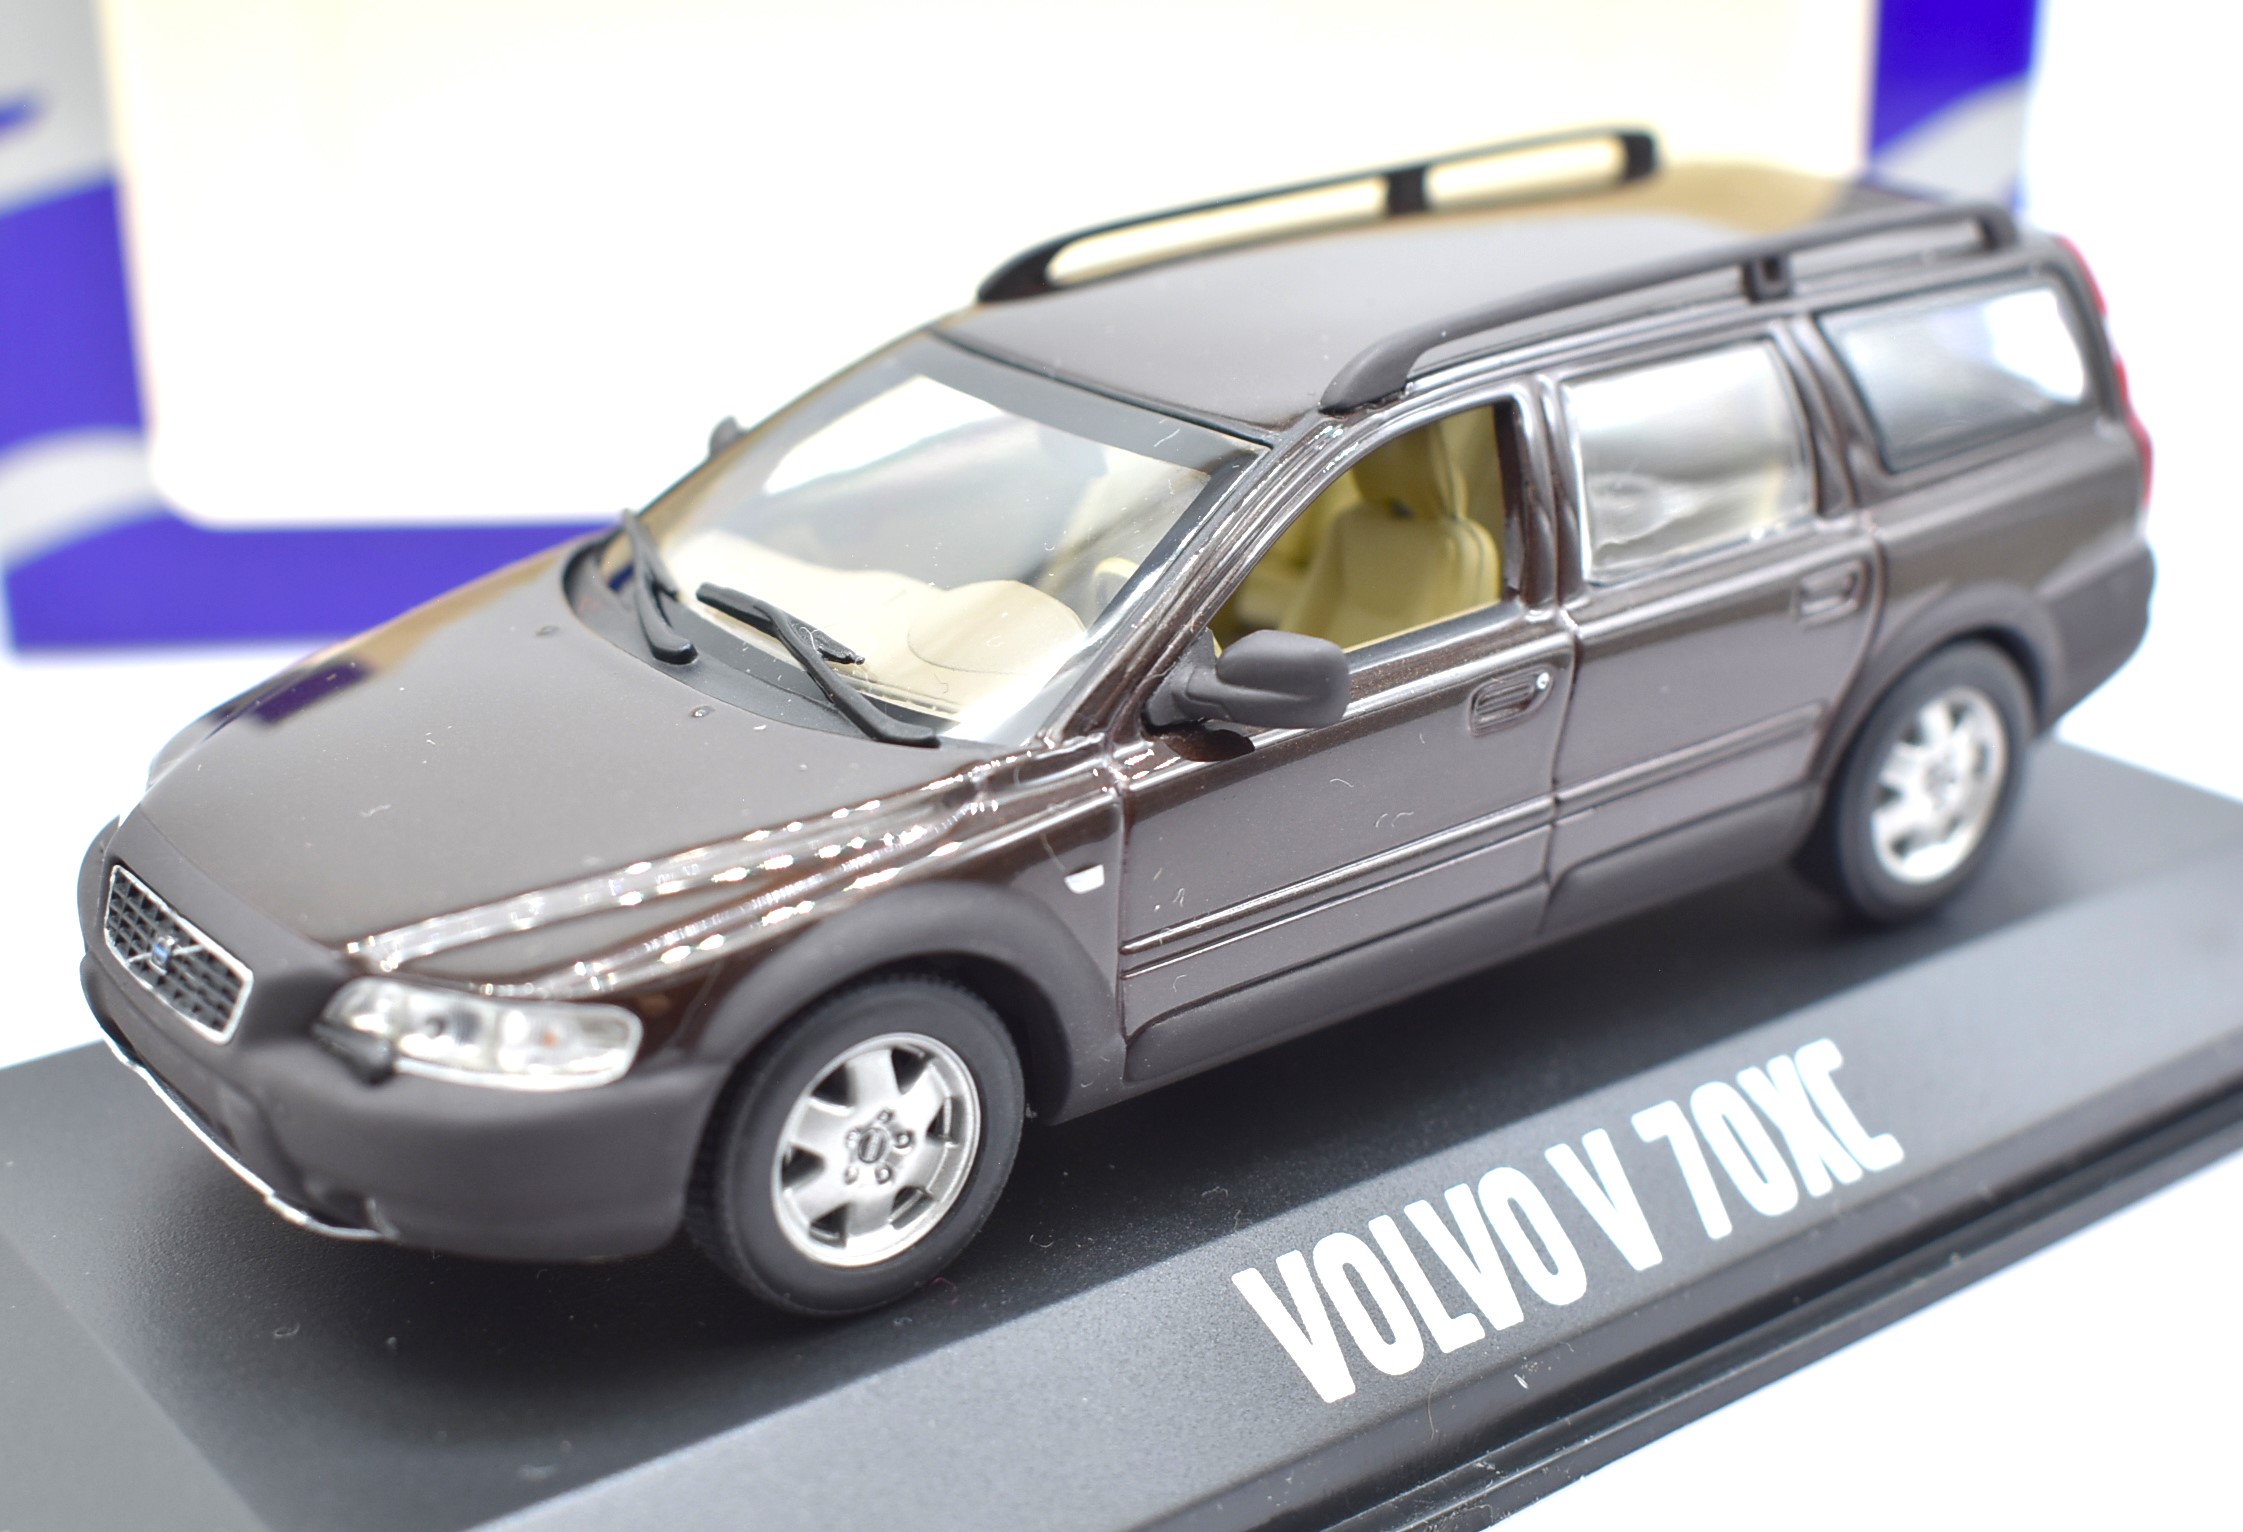 modellauto Modellauto Volvo V 70XC Maßstab 1:43 diecastmodellbauautomodell aussammlung